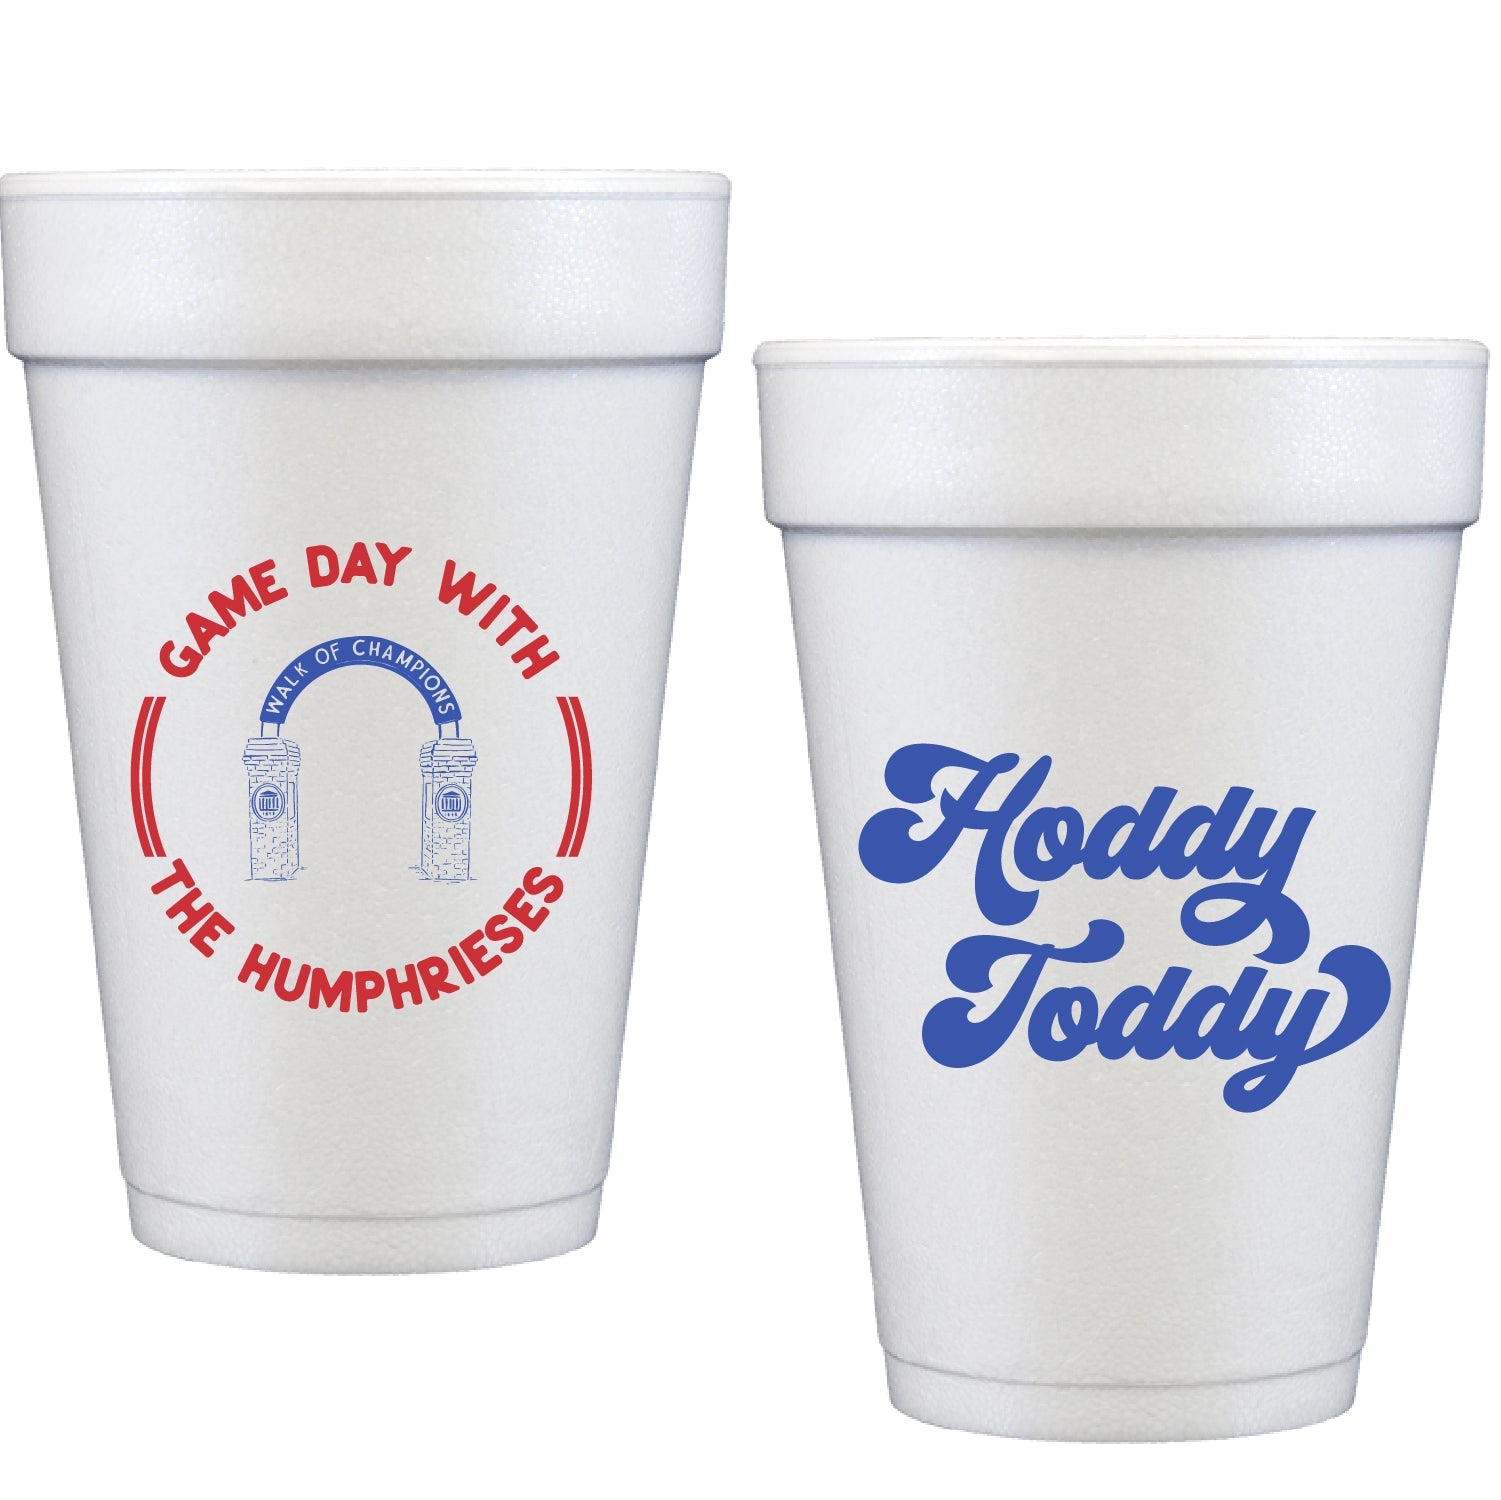 Marketing Foam Stadium Cup | Promotional Styrofoam Cups & Foam Cups